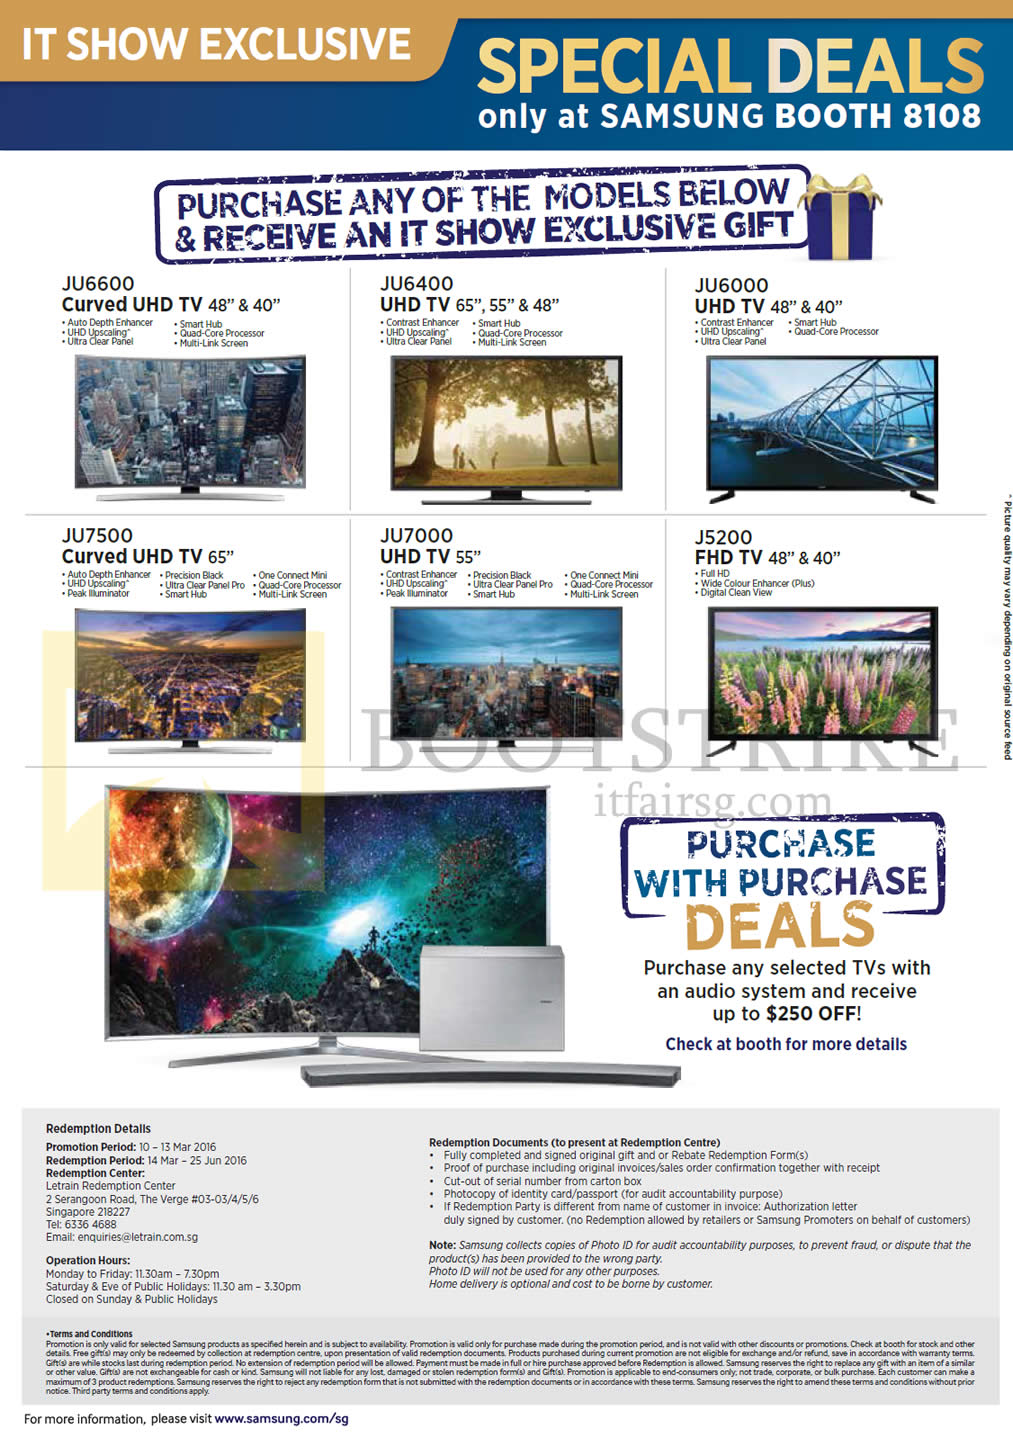 IT SHOW 2016 price list image brochure of Samsung TVs (No Prices) Curved UHD FHD JU6600, JU6400, JU6000, JU7000, JU5200